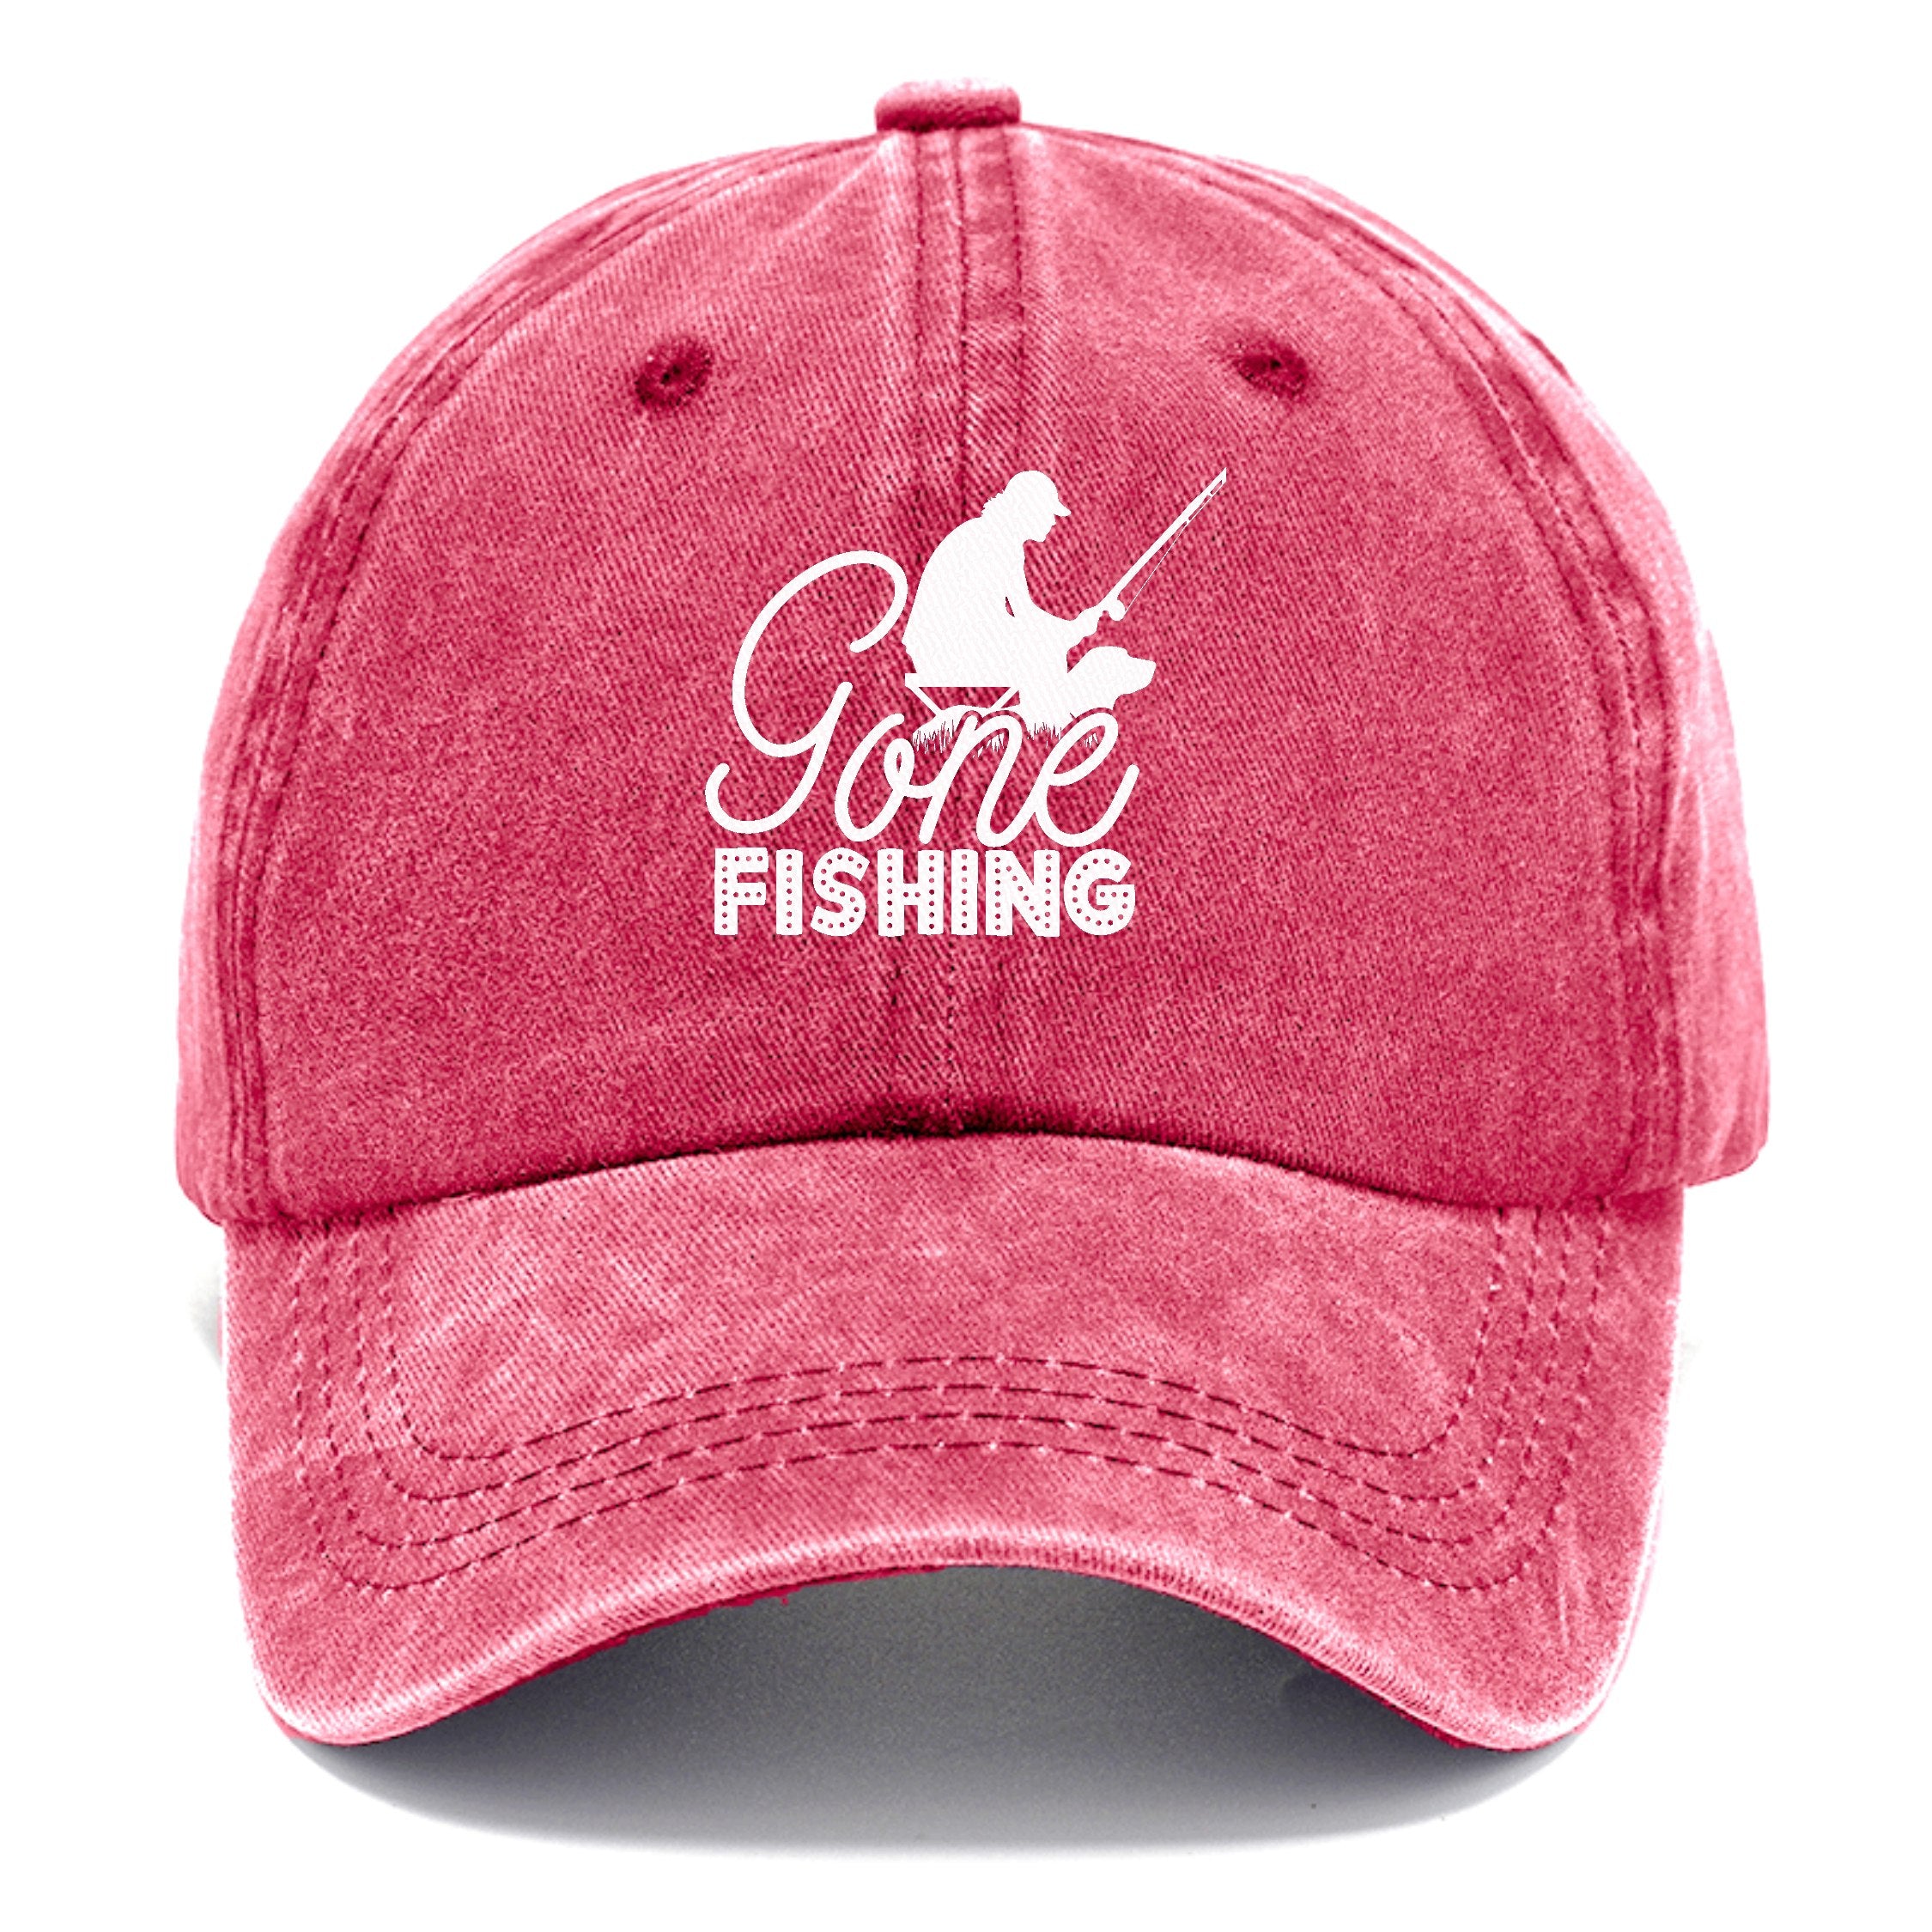 Gone Fishing Classic Cap Pomegranate Blush(Pink)